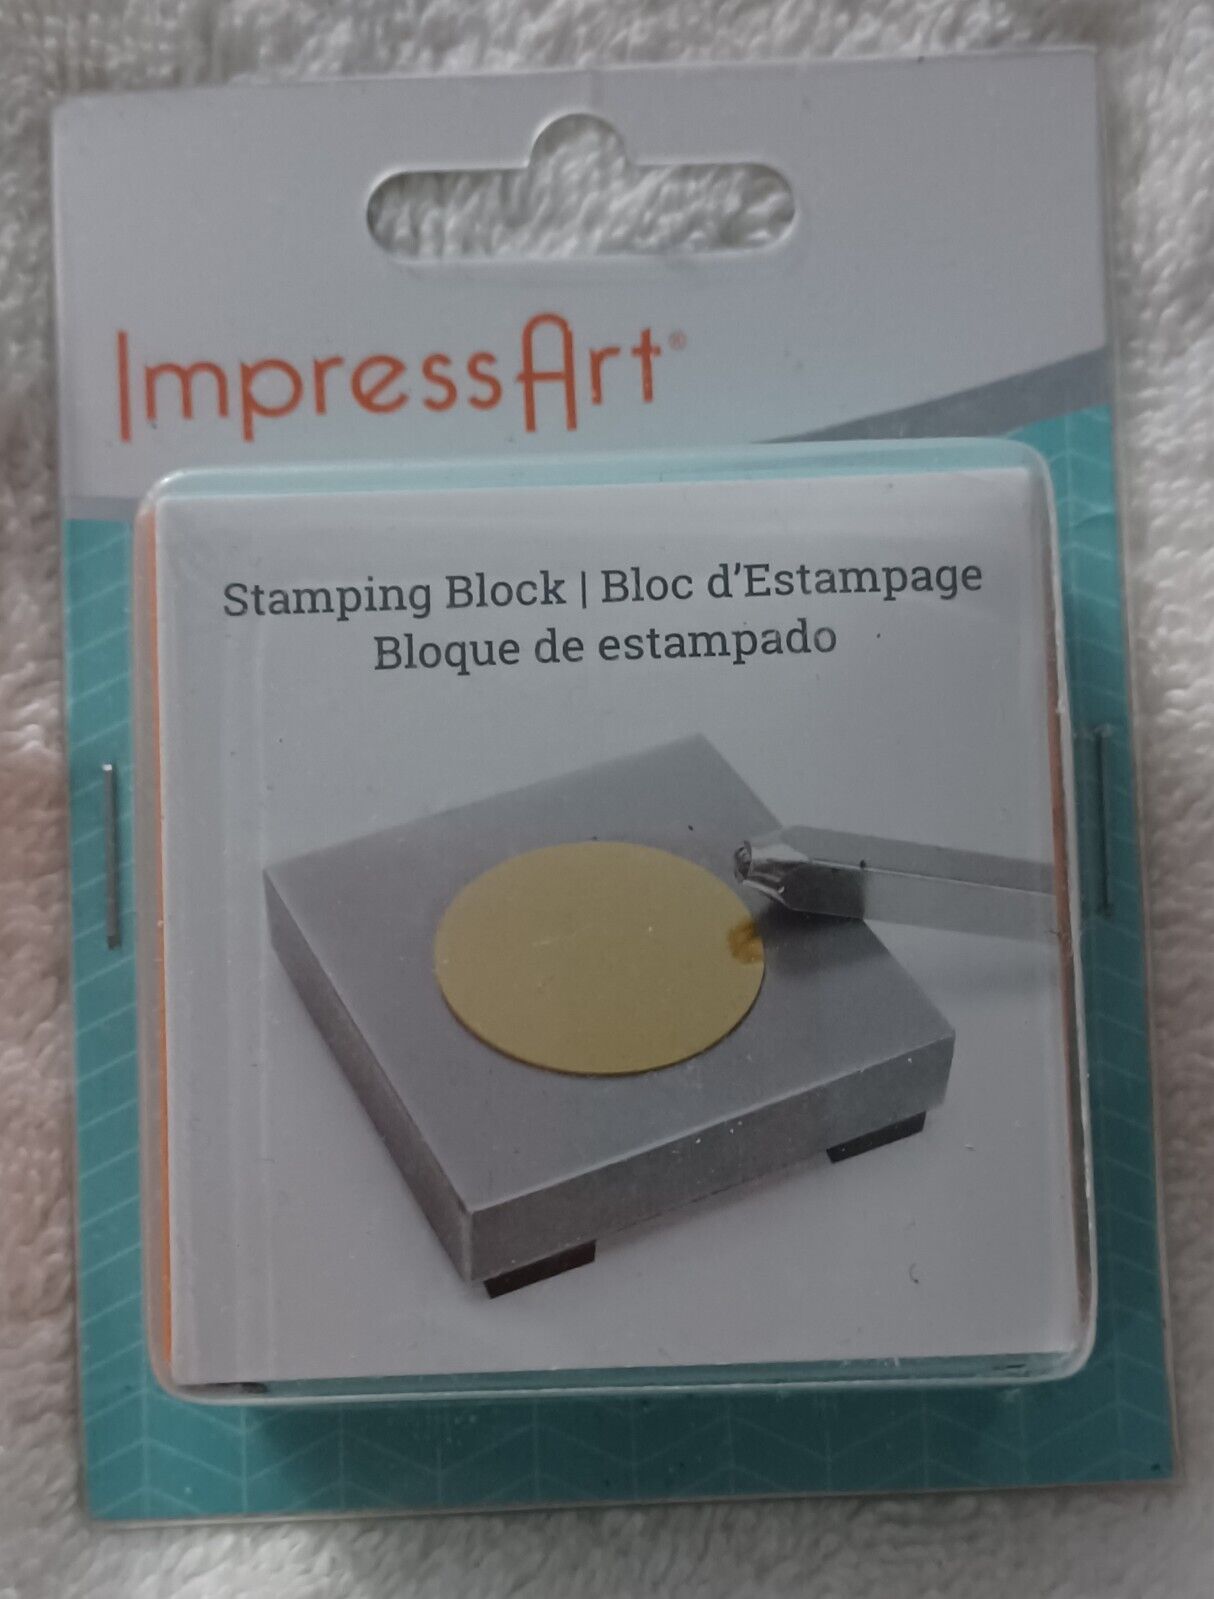 Impress Art Small Stamping Block 2x2 Inch